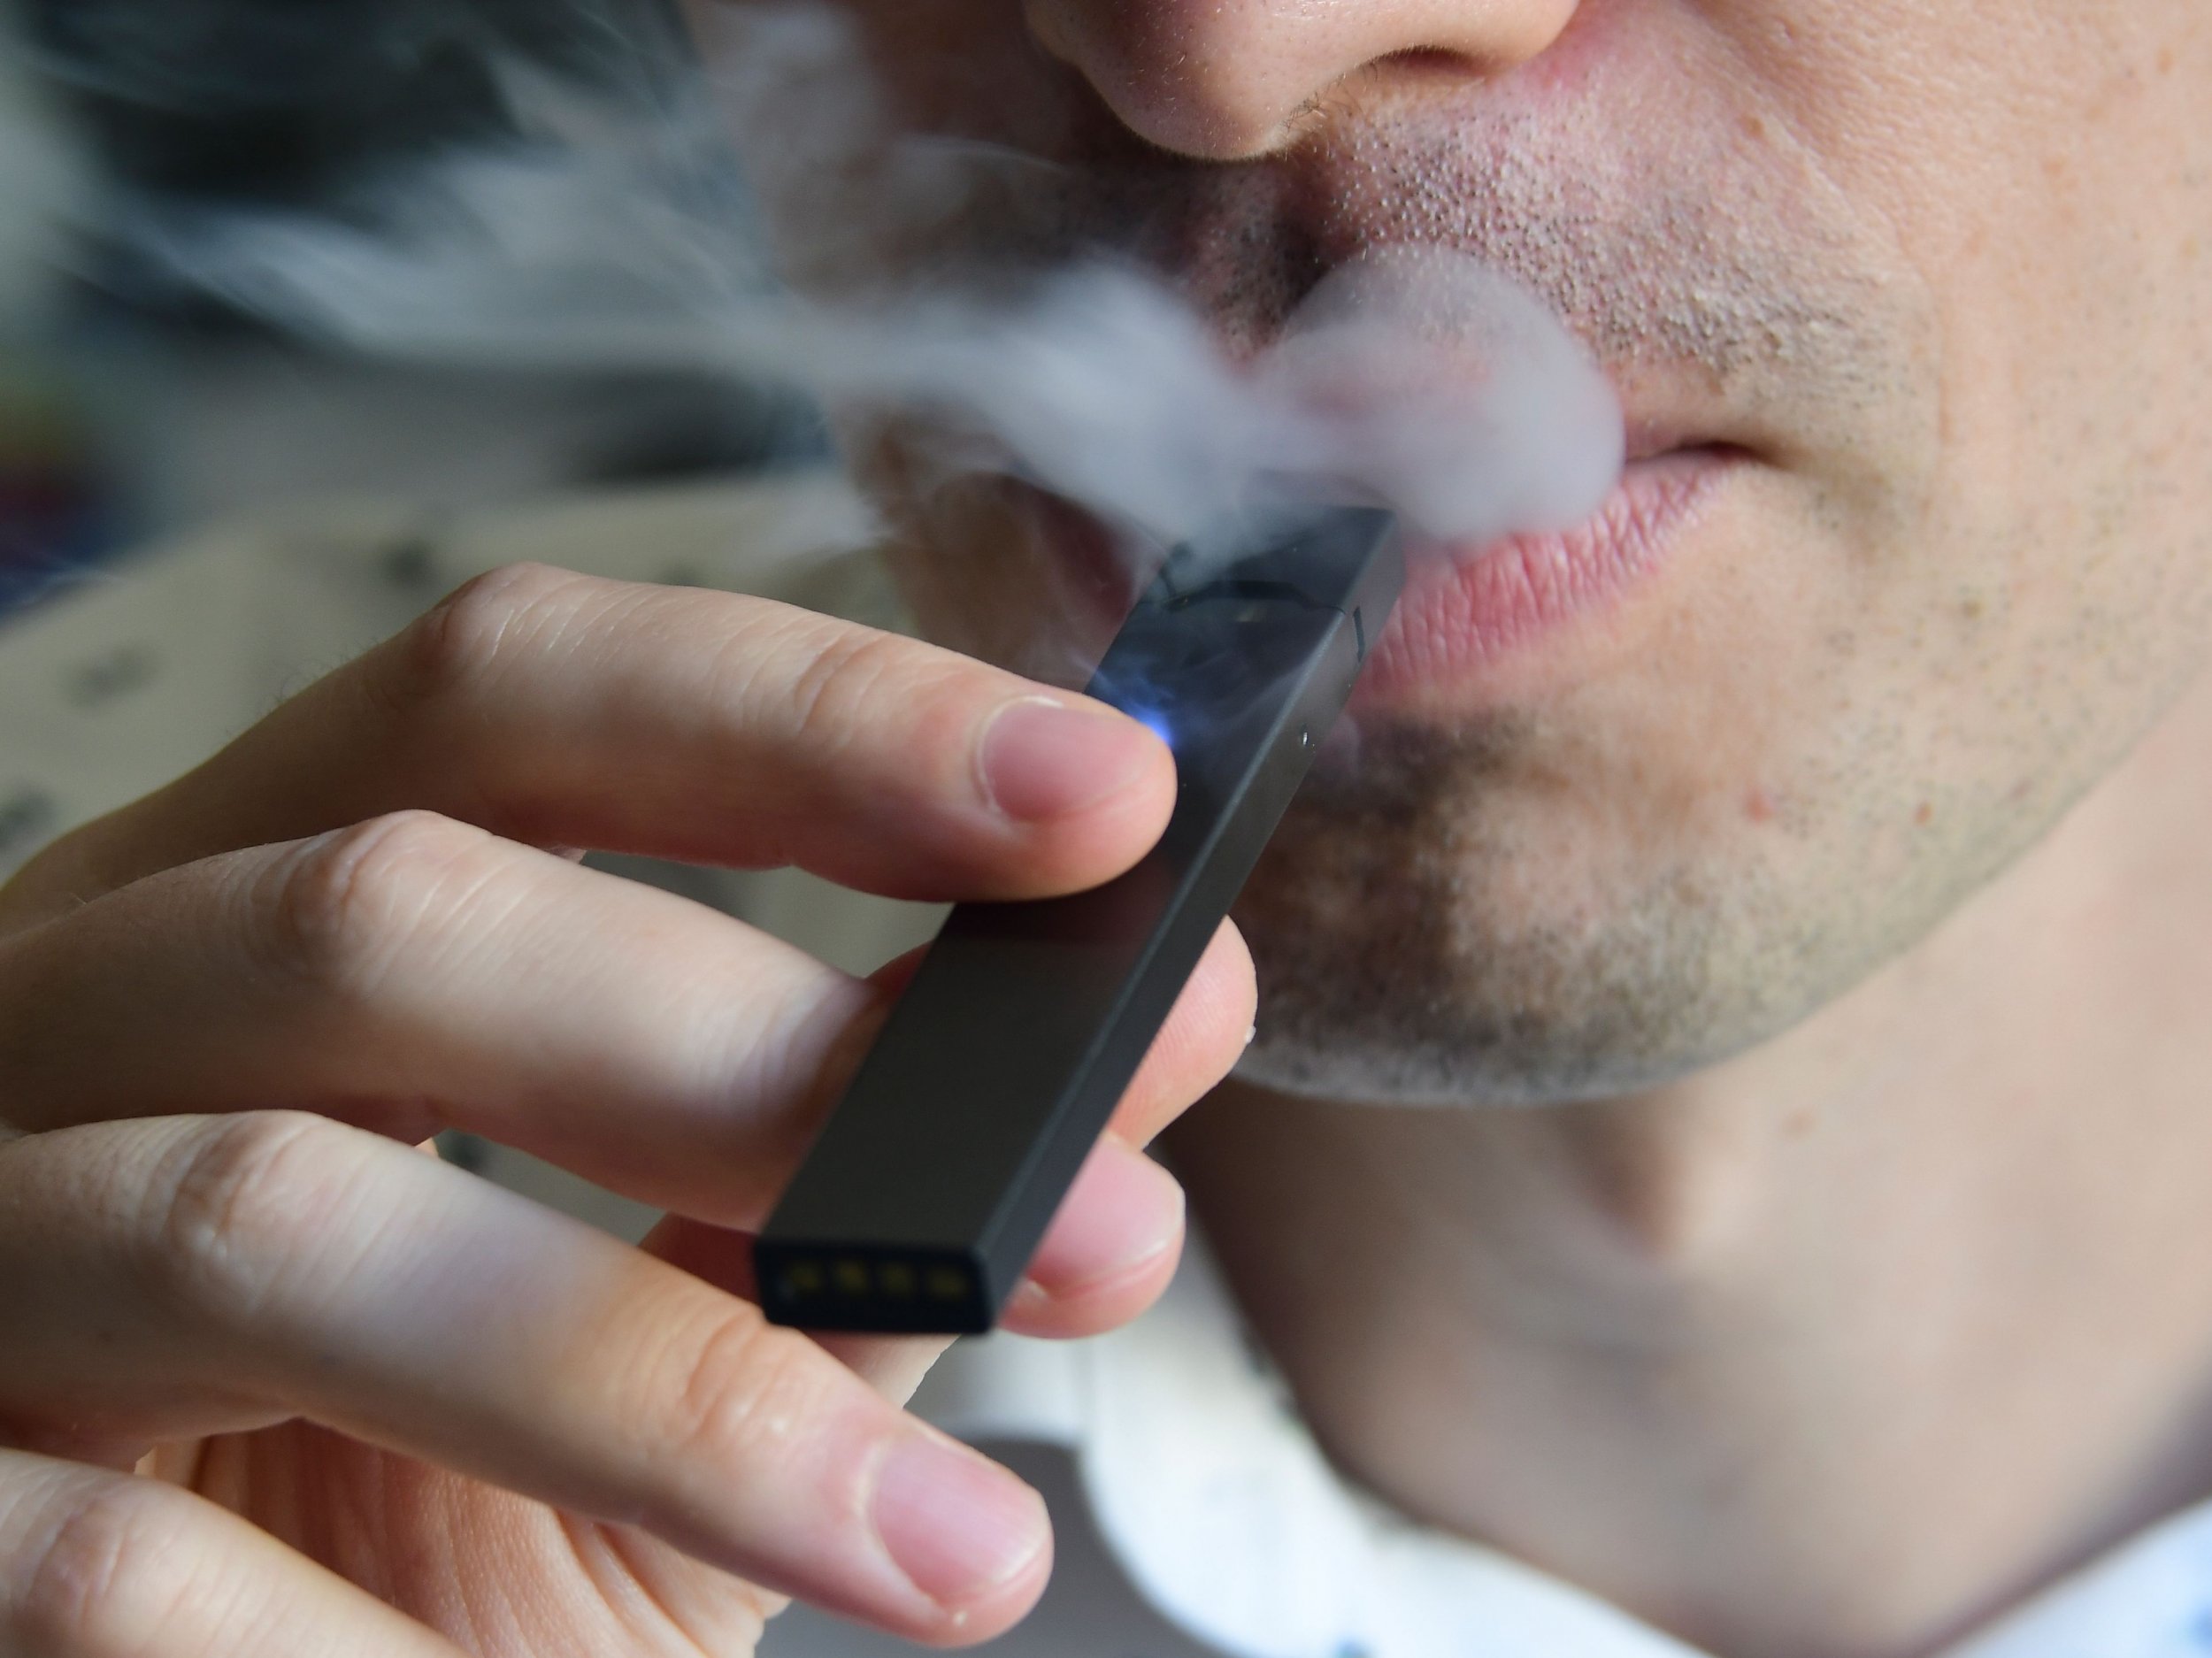 vaping teen tobacco use cdc 